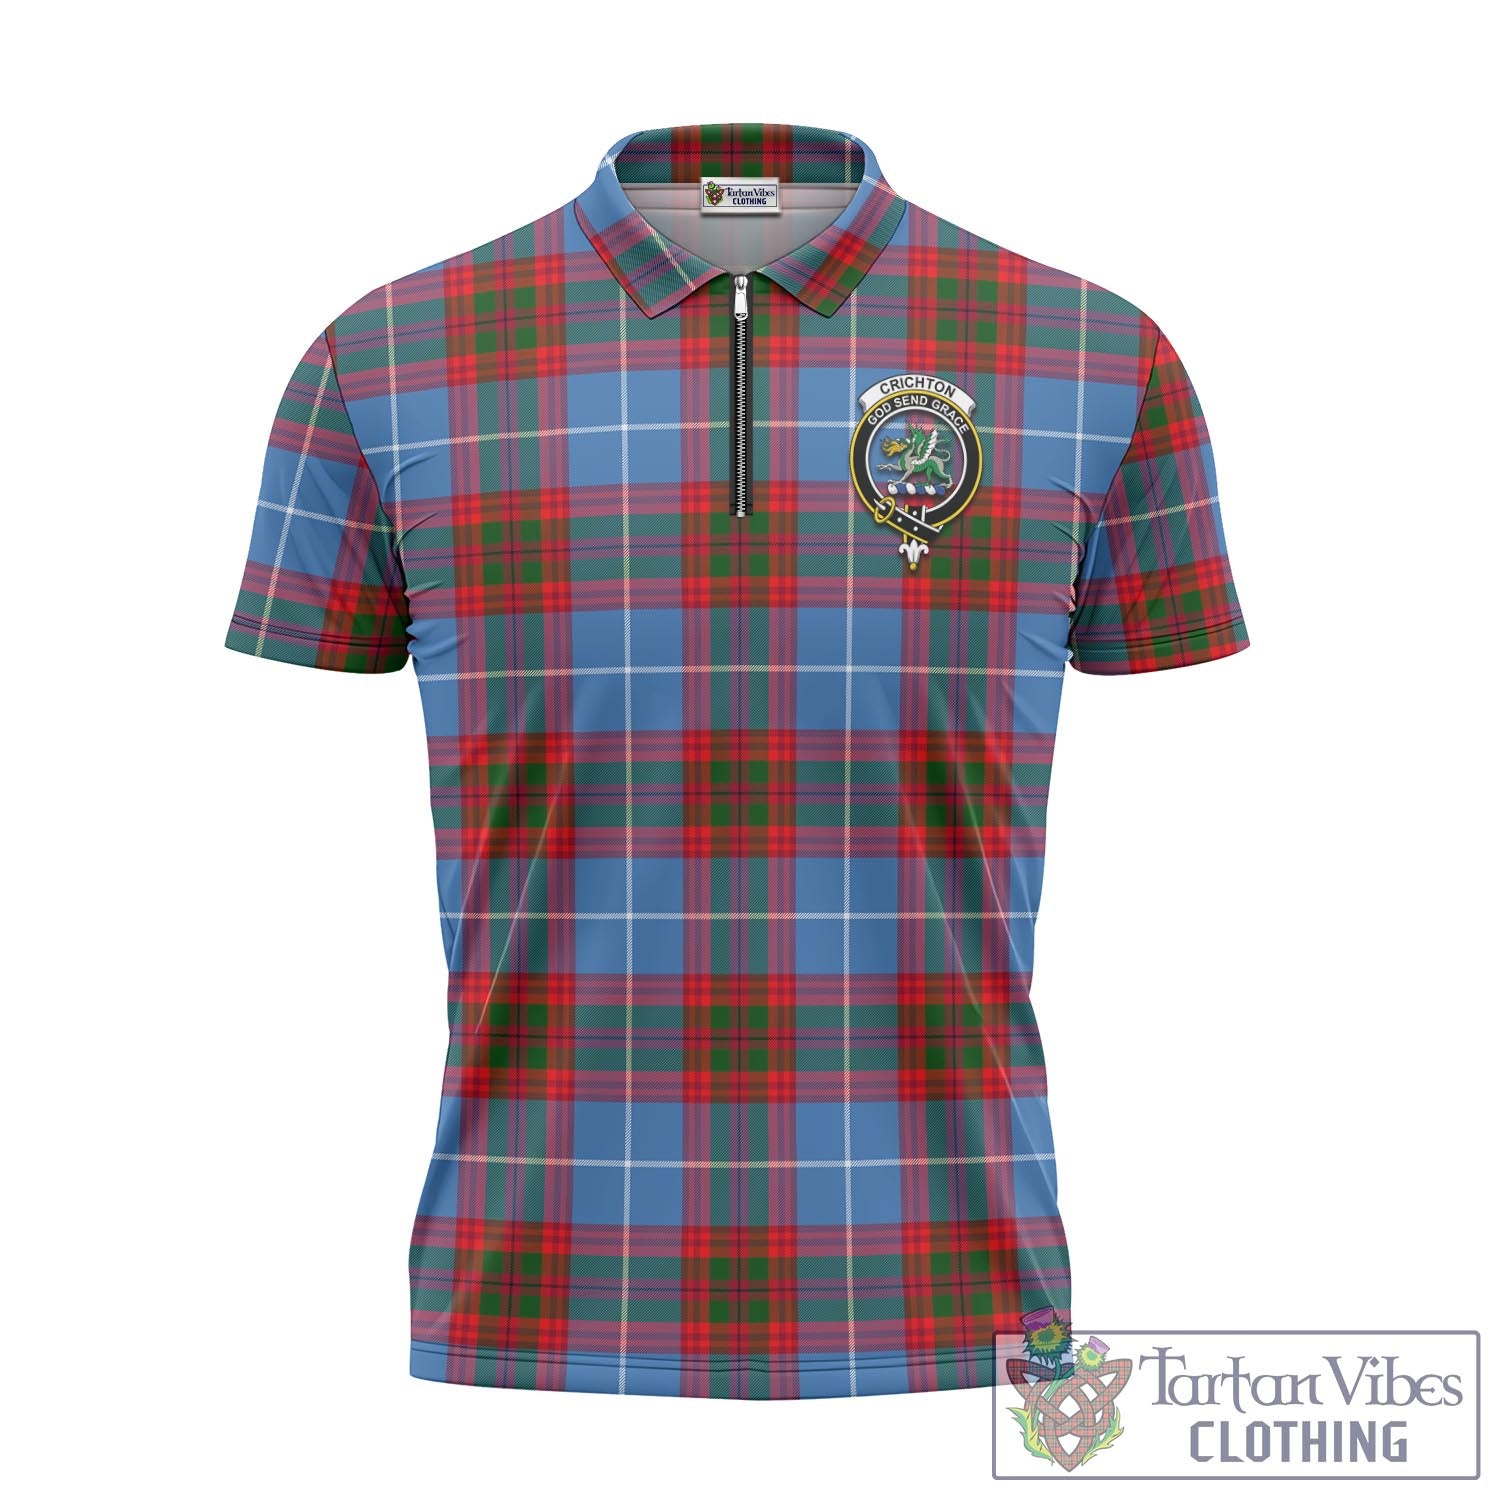 Tartan Vibes Clothing Crichton Tartan Zipper Polo Shirt with Family Crest